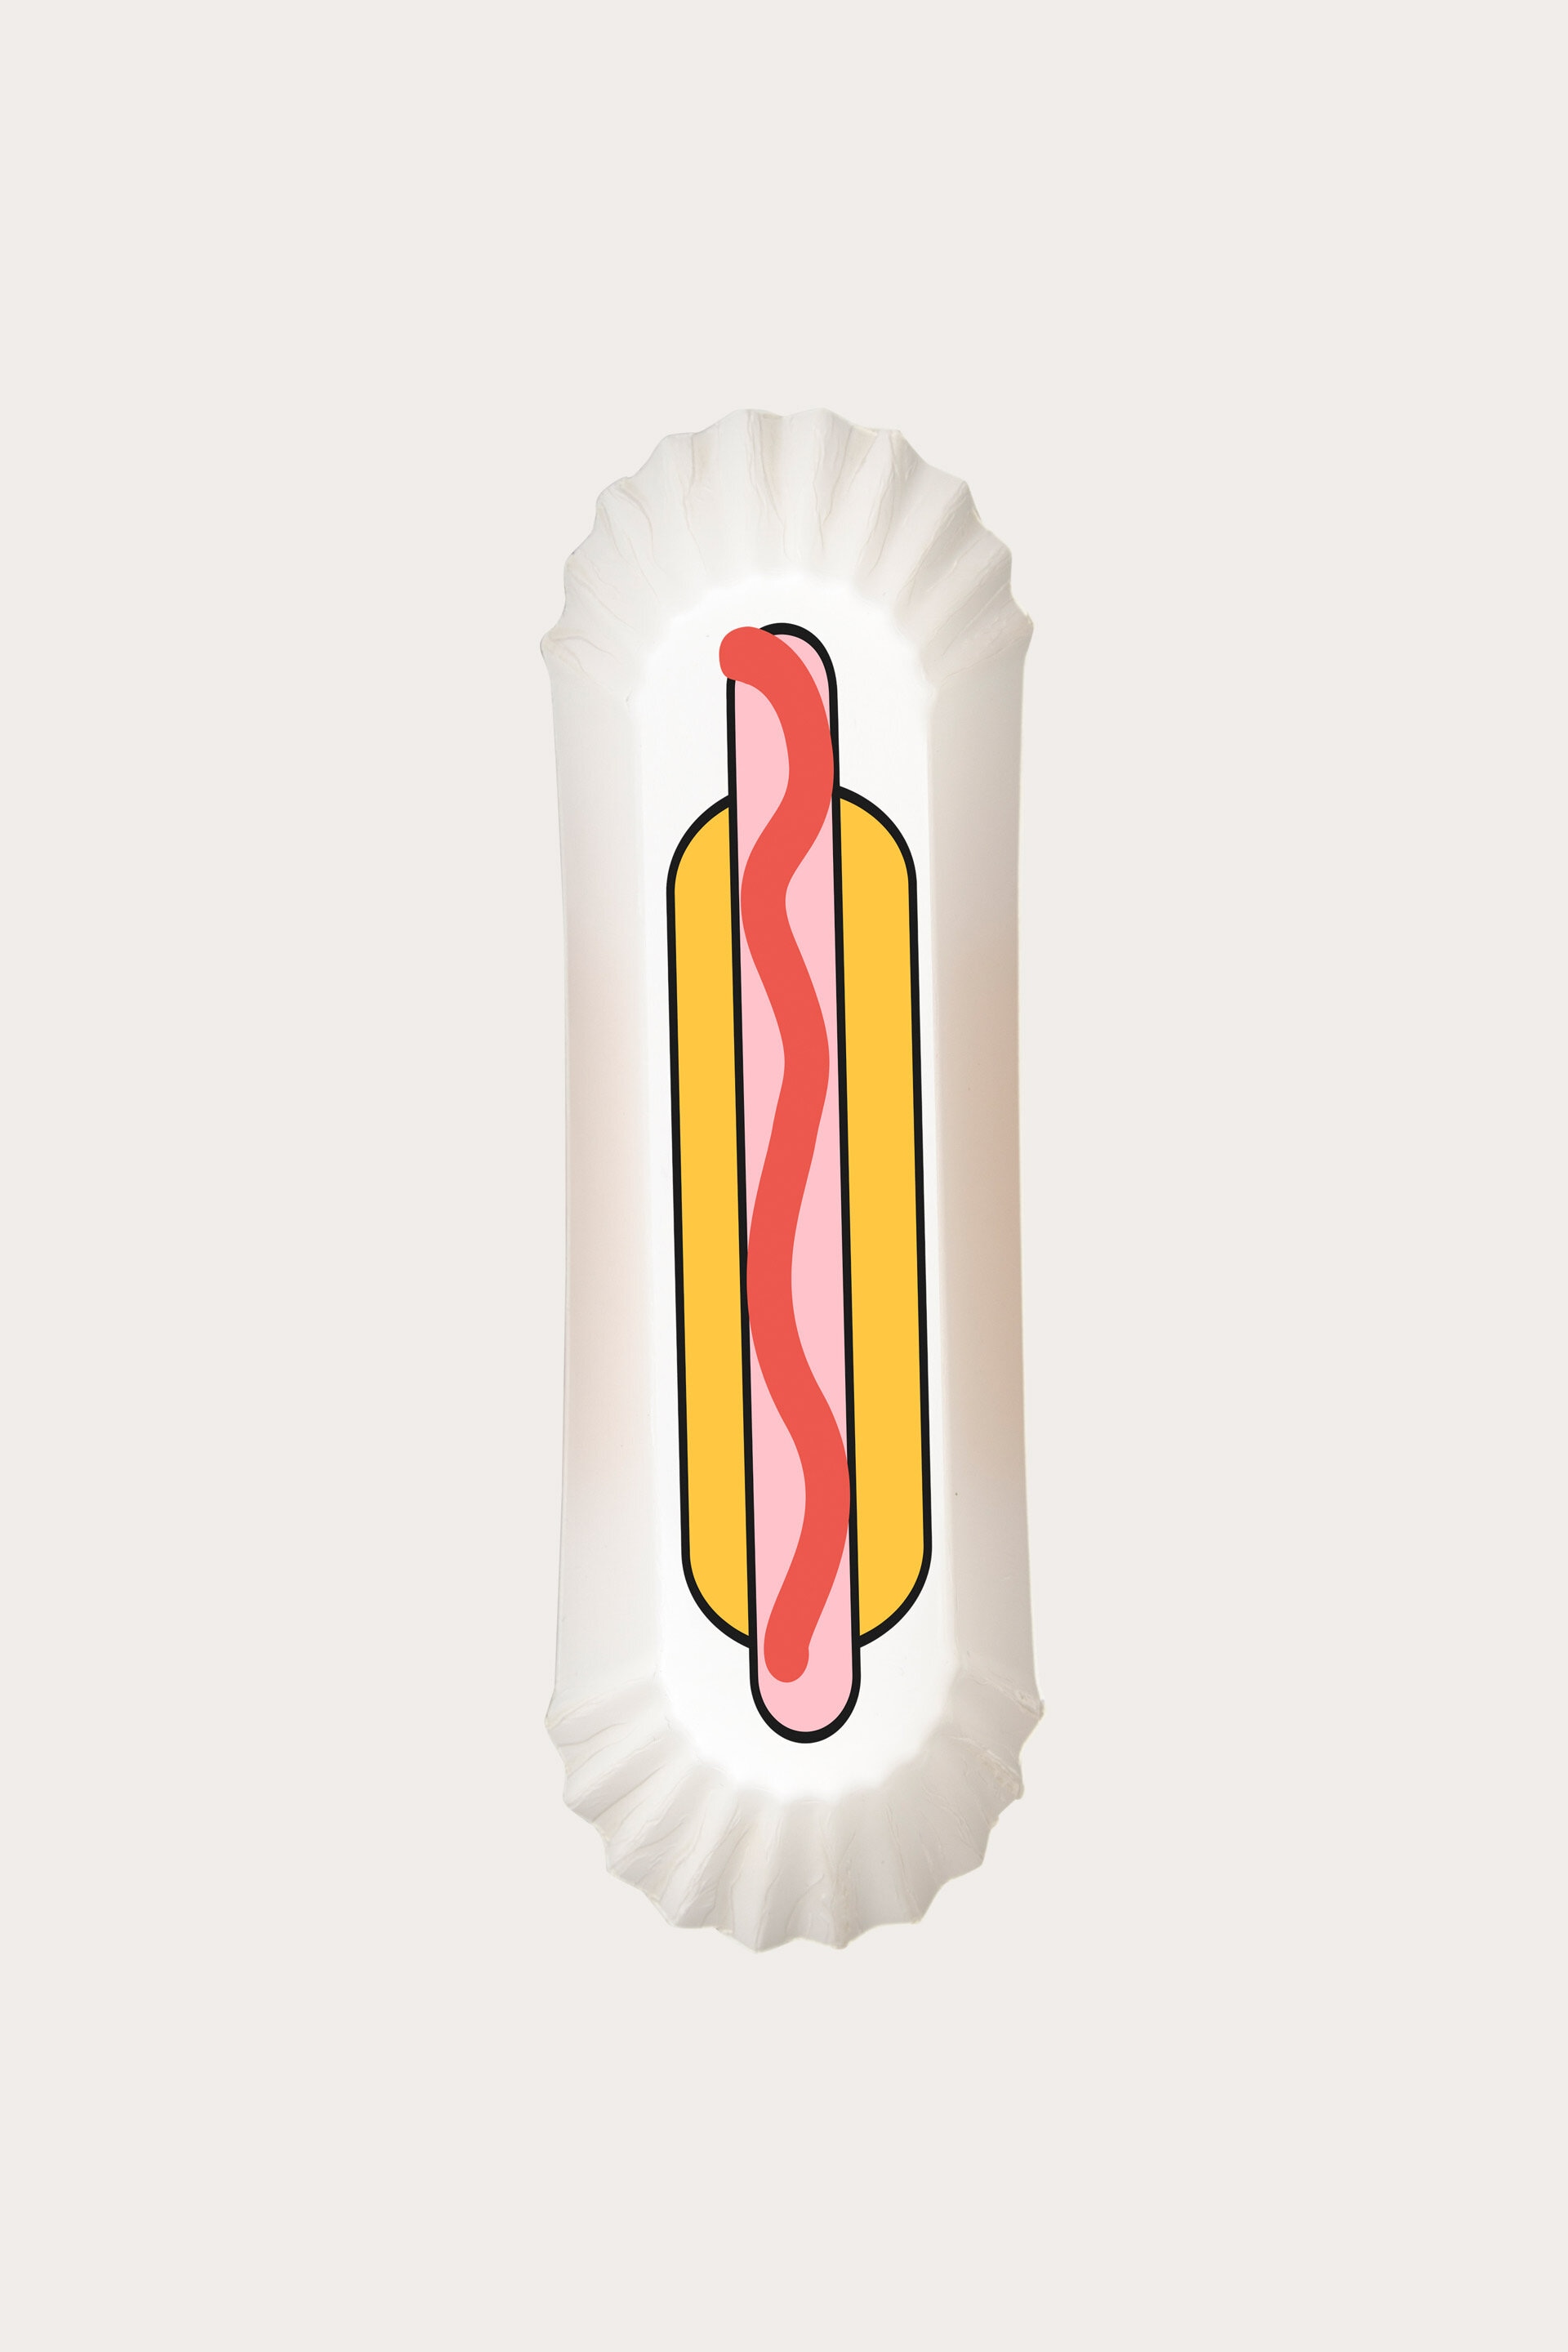 hot dog paper plates